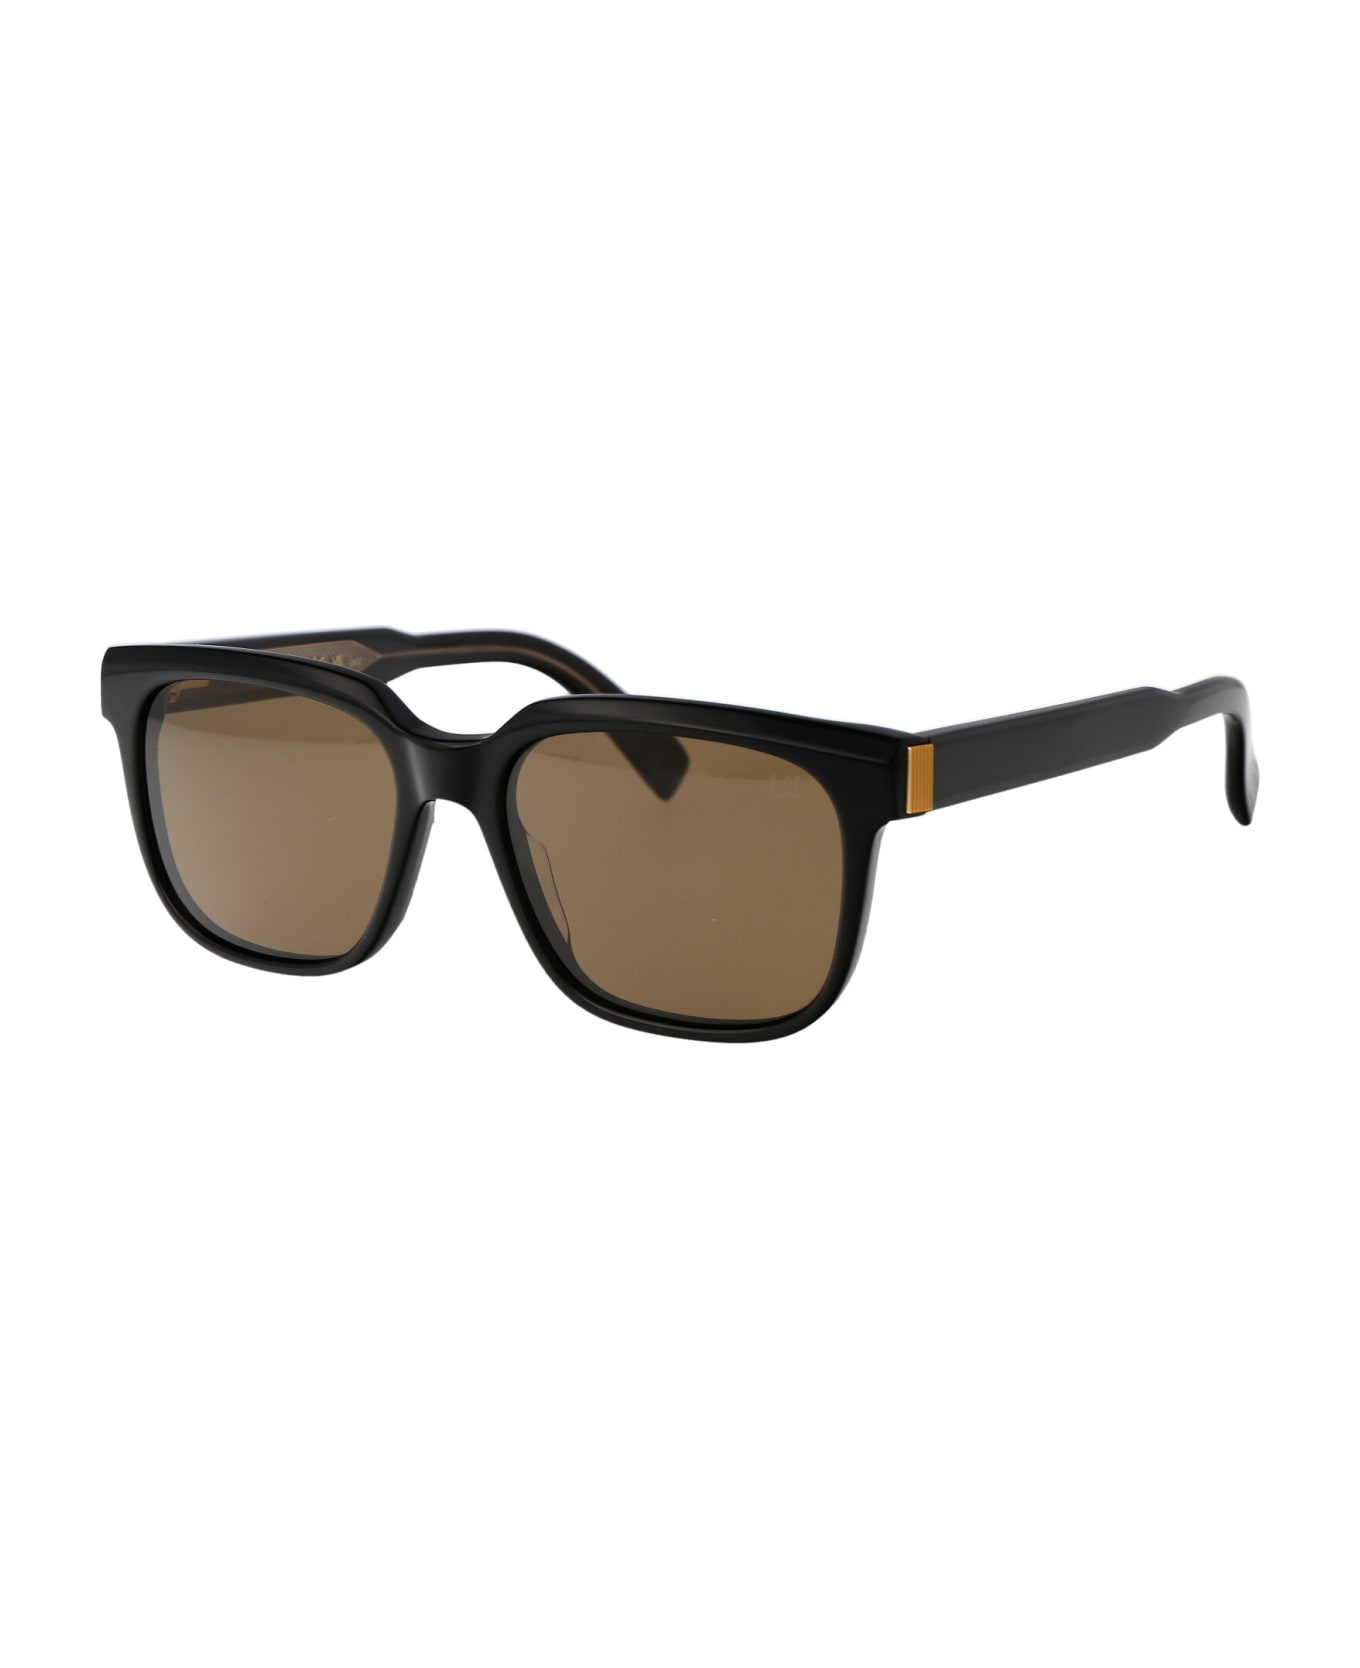 Dunhill Du0002s Sunglasses - 001 BLACK BLACK BROWN